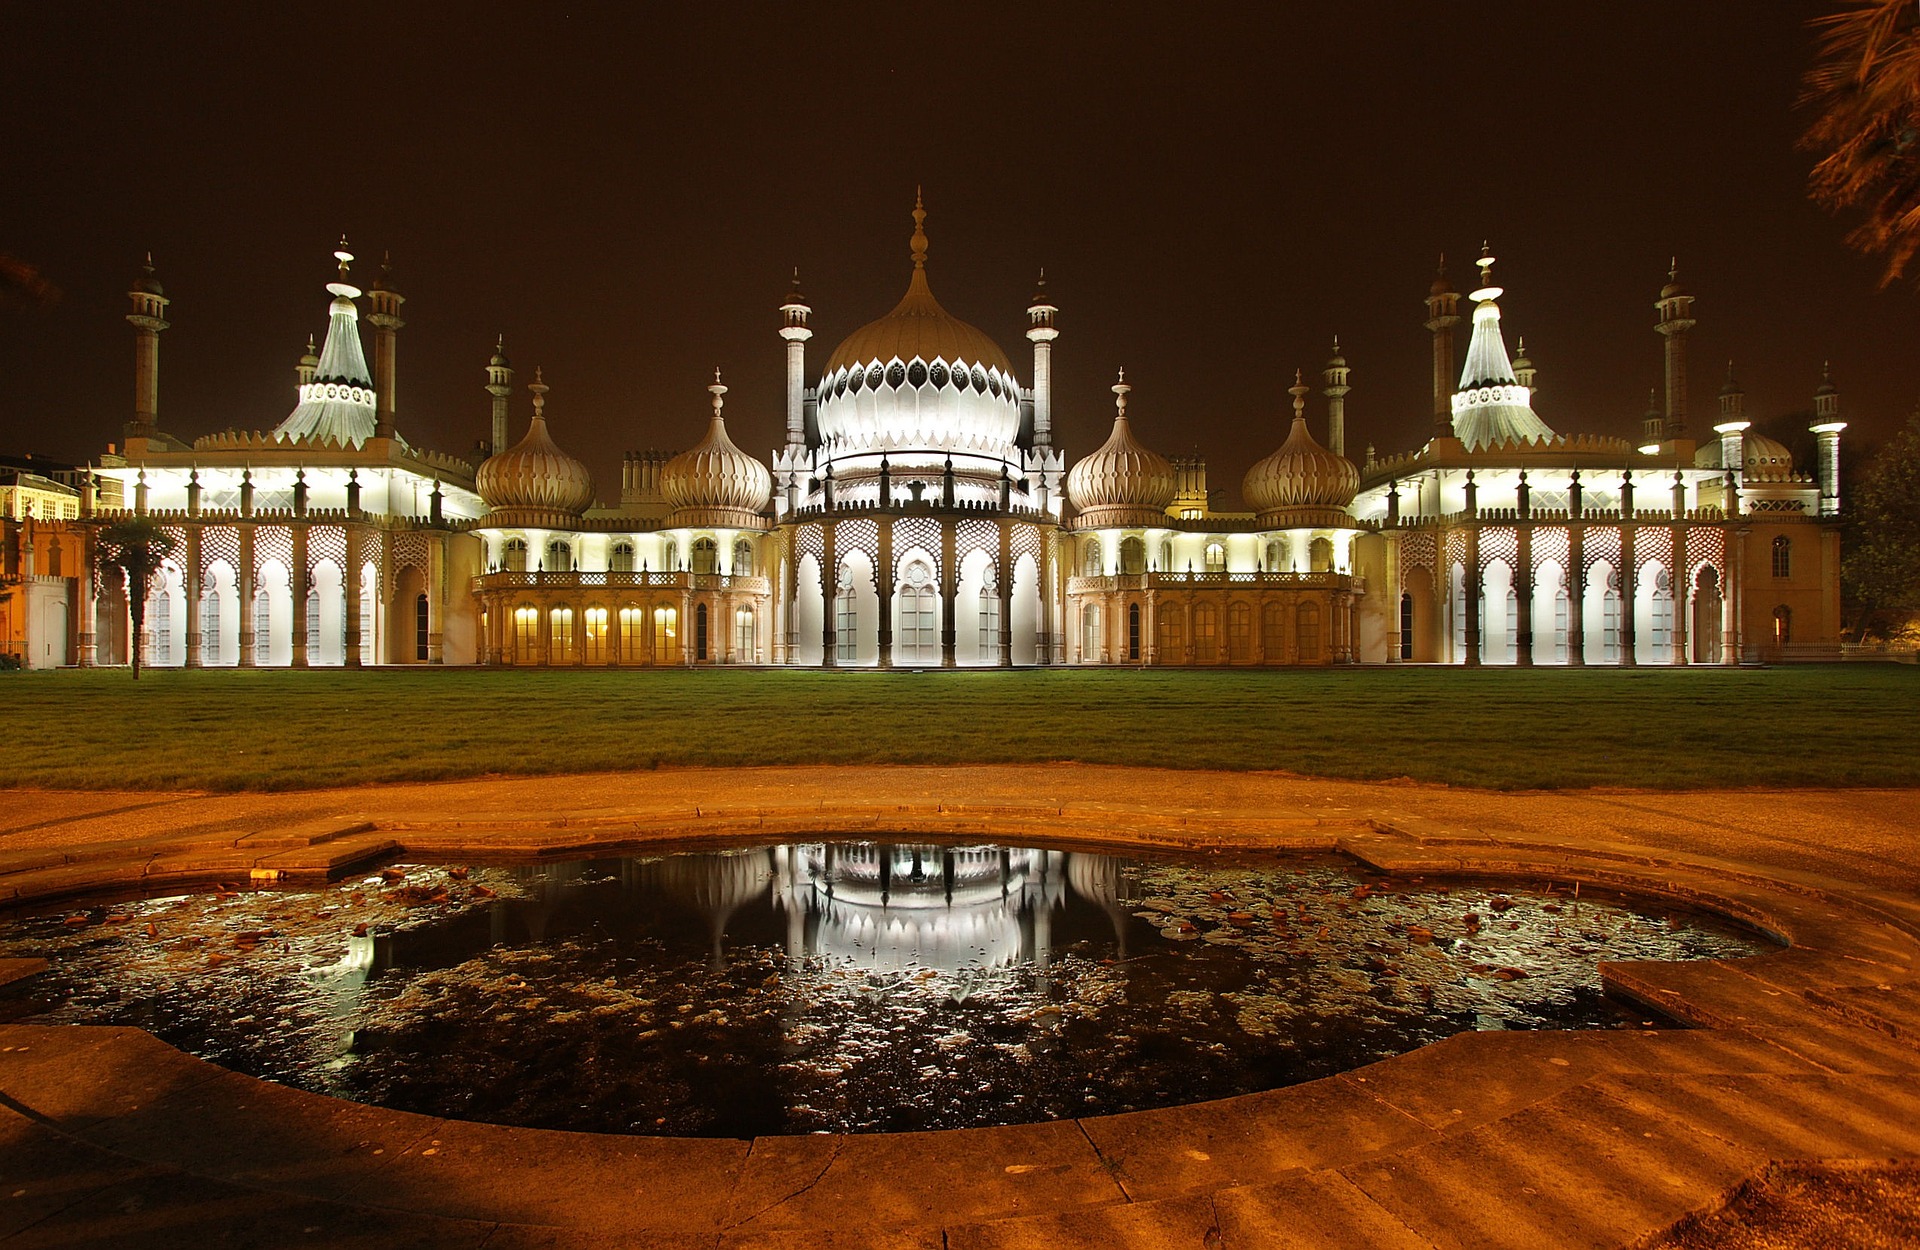 Brighton The Royal Pavilion